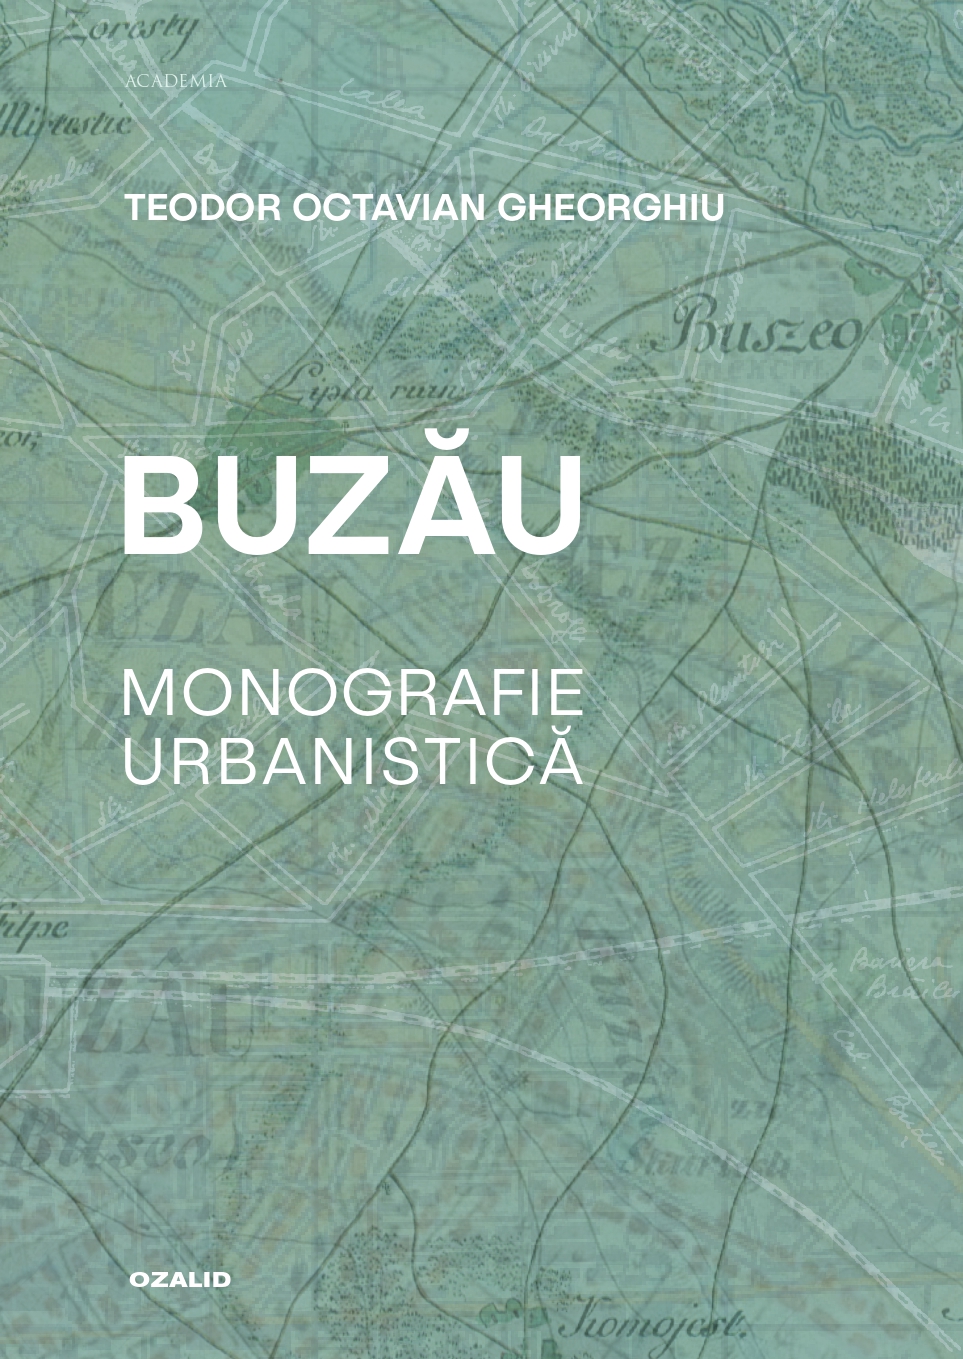 Buzau. Monografie urbanistica | Teodor Octavian Gheorghiu carturesti.ro poza bestsellers.ro